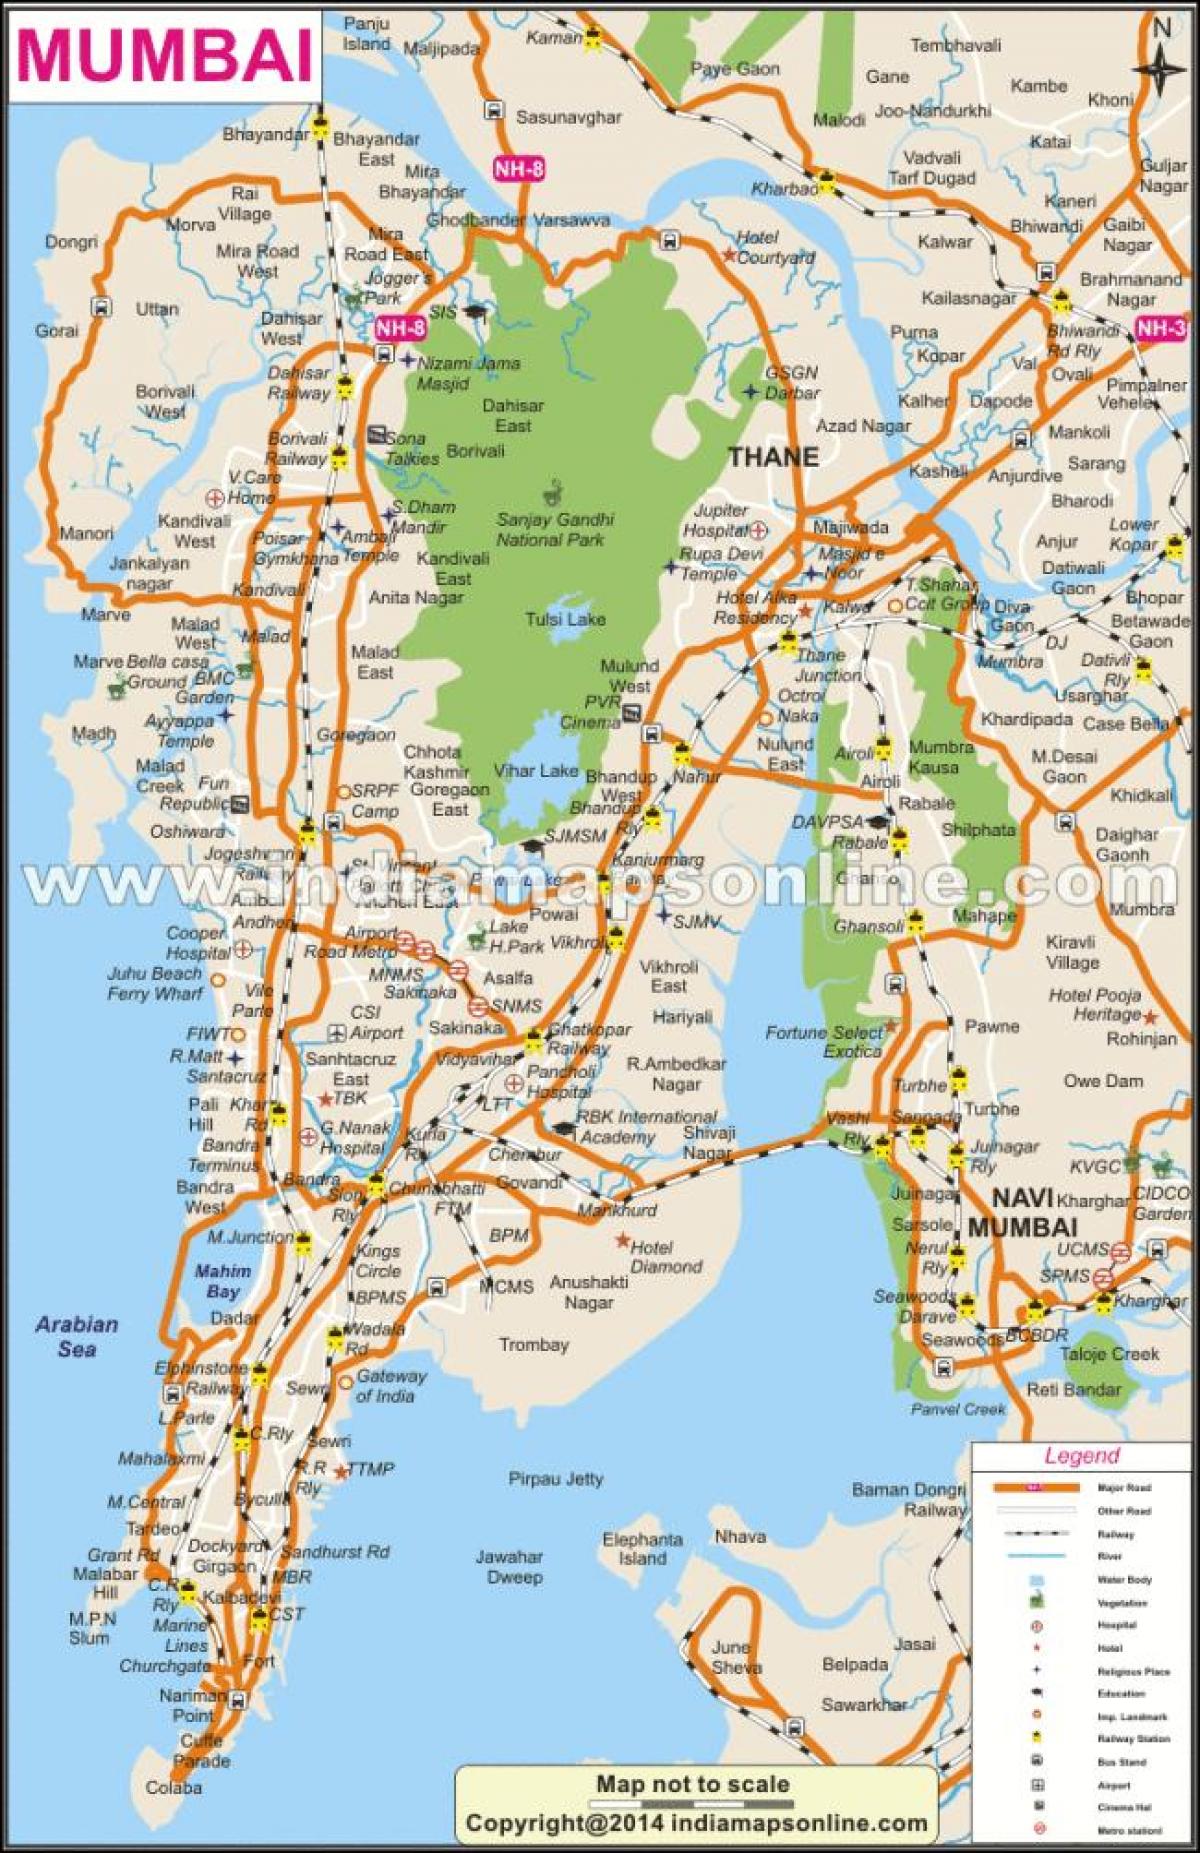 Mumbai on map